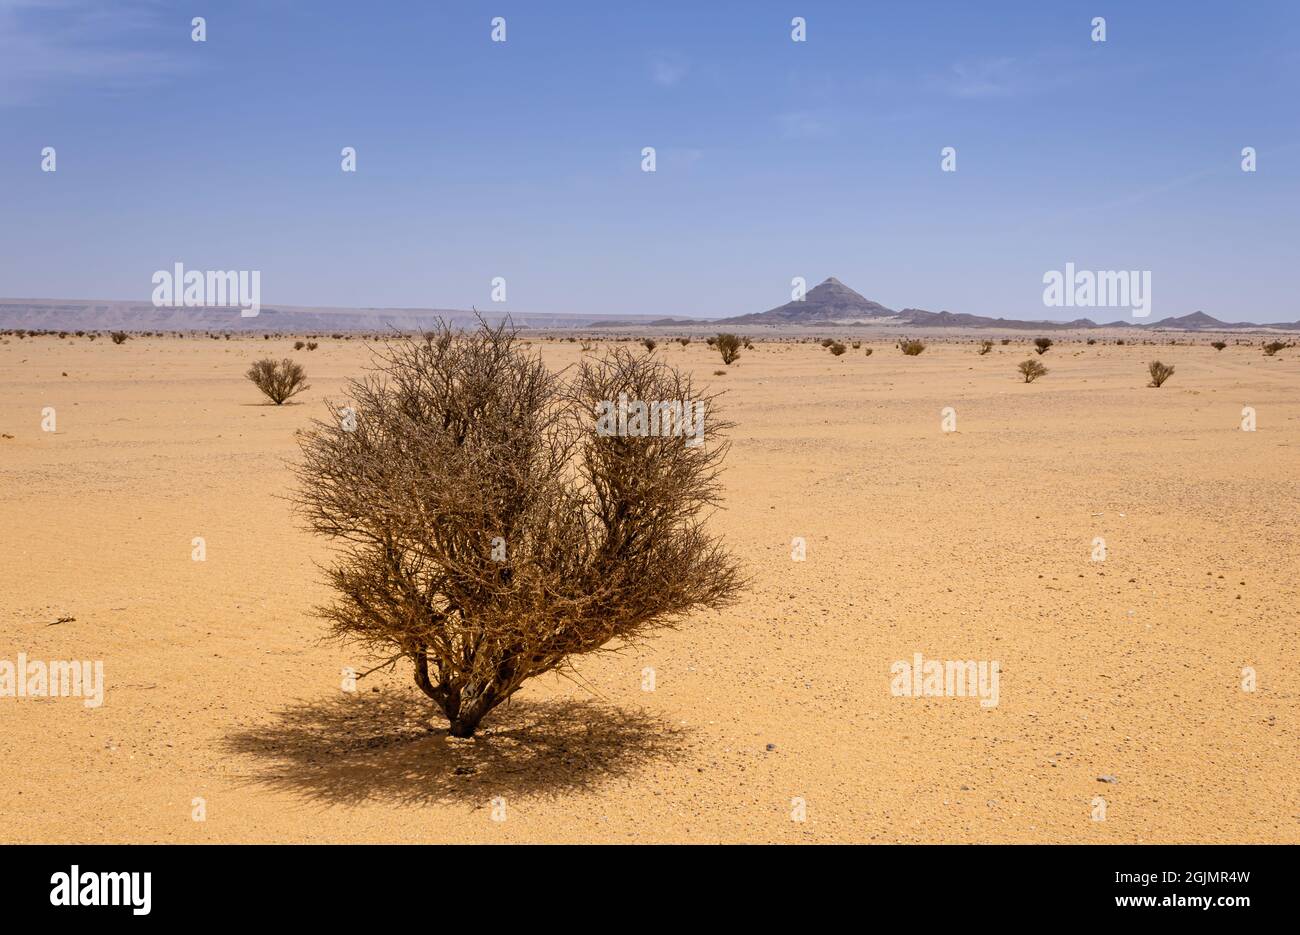 A desert landscape with acacia trees and shrubs, Saudi Arabia Stock Photo